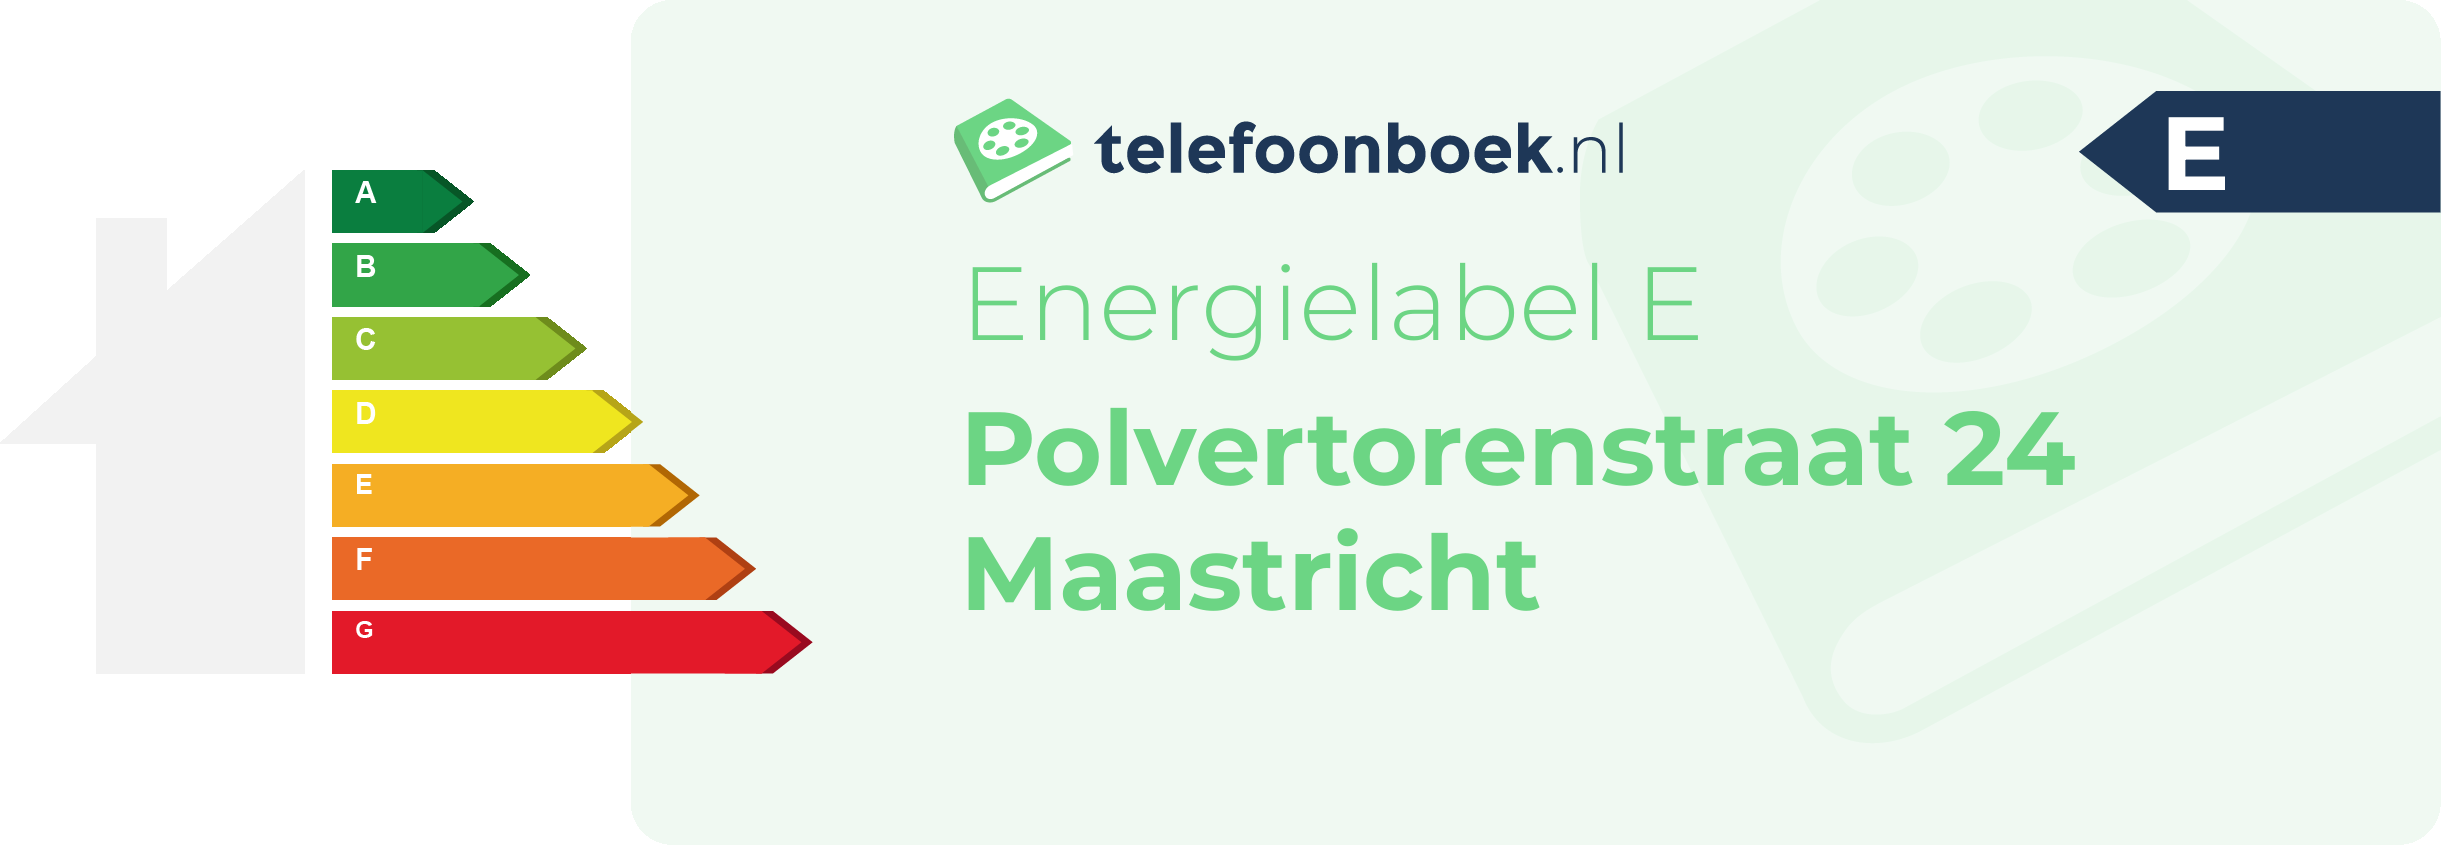 Energielabel Polvertorenstraat 24 Maastricht